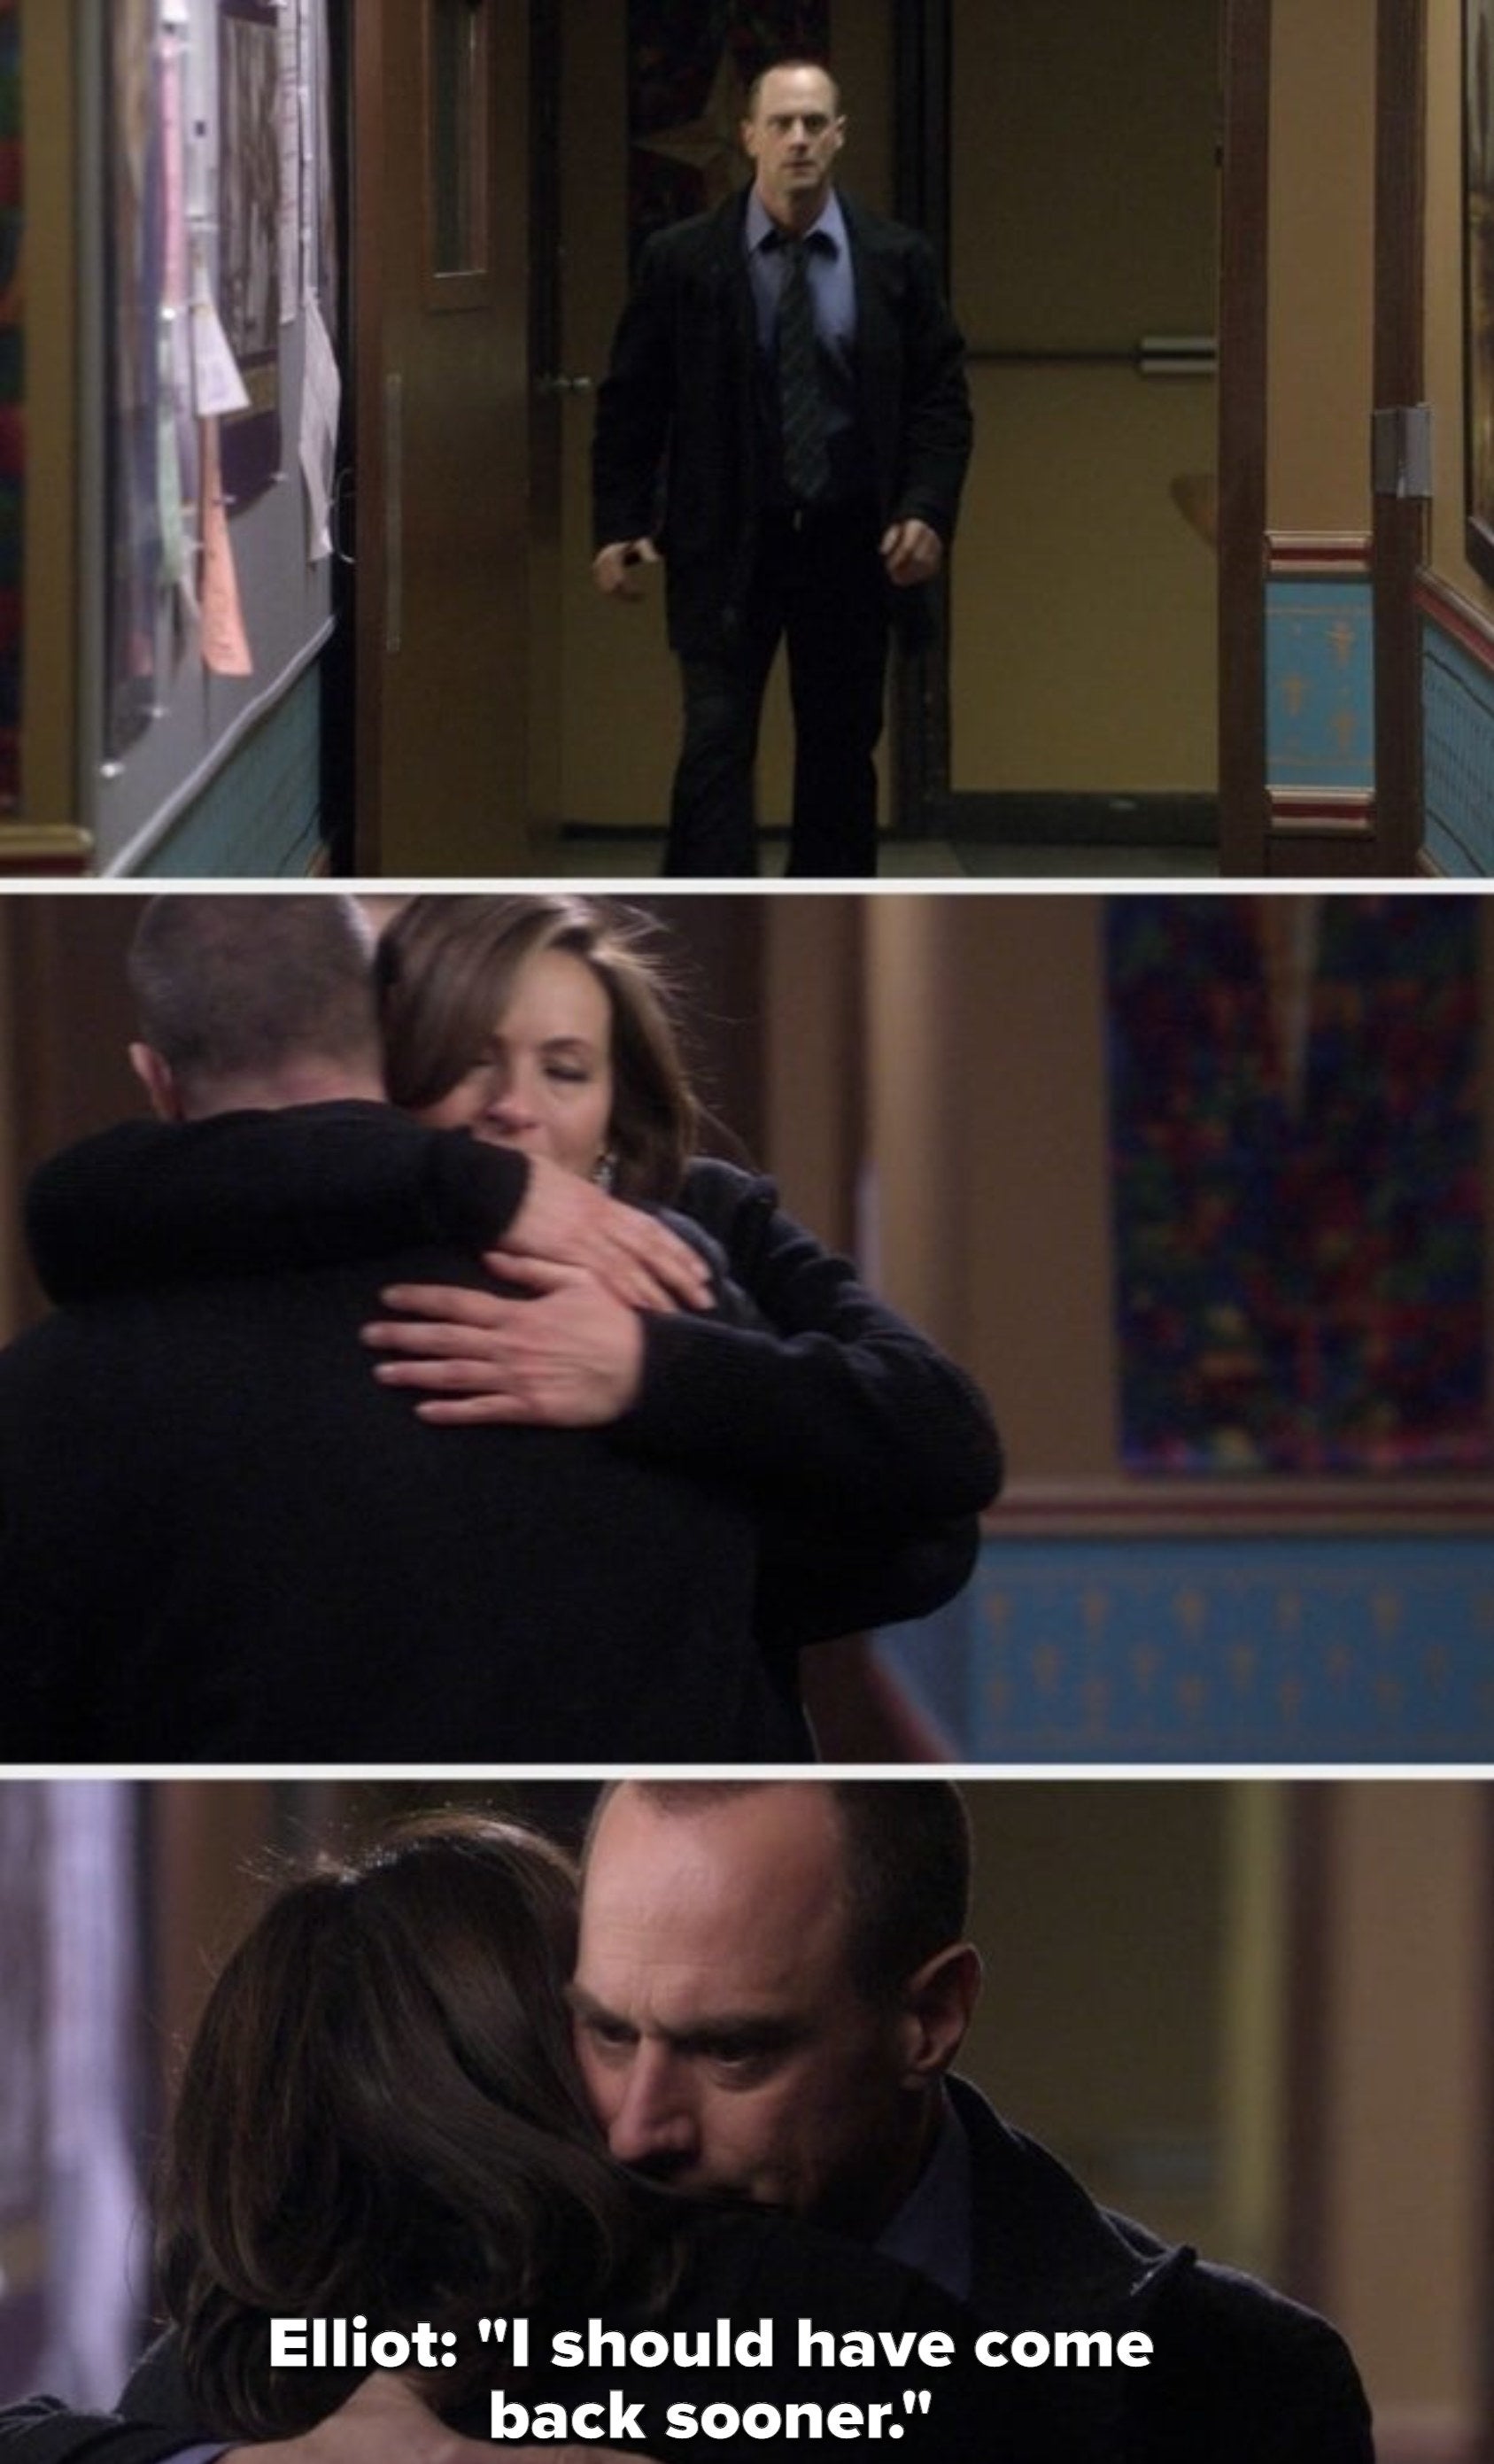 Olivia and Elliot embrace and share a long hug, Elliot says he should have come back sooner